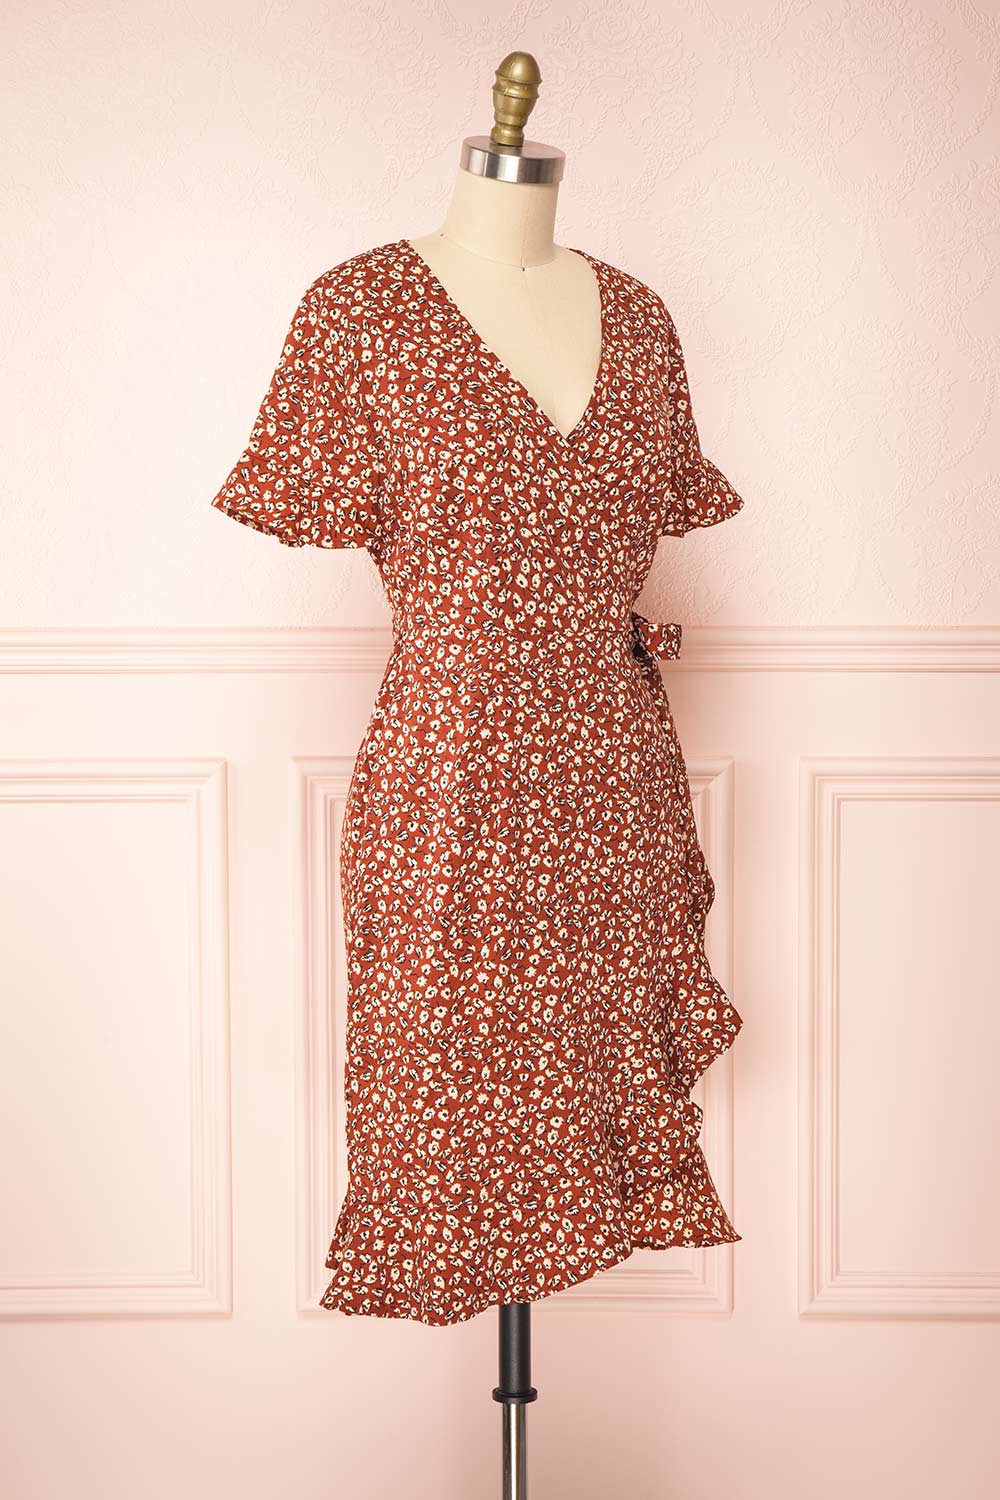 Oxylos Brown Floral Short Wrap Dress w/ Ruffles | Boutique 1861 side view